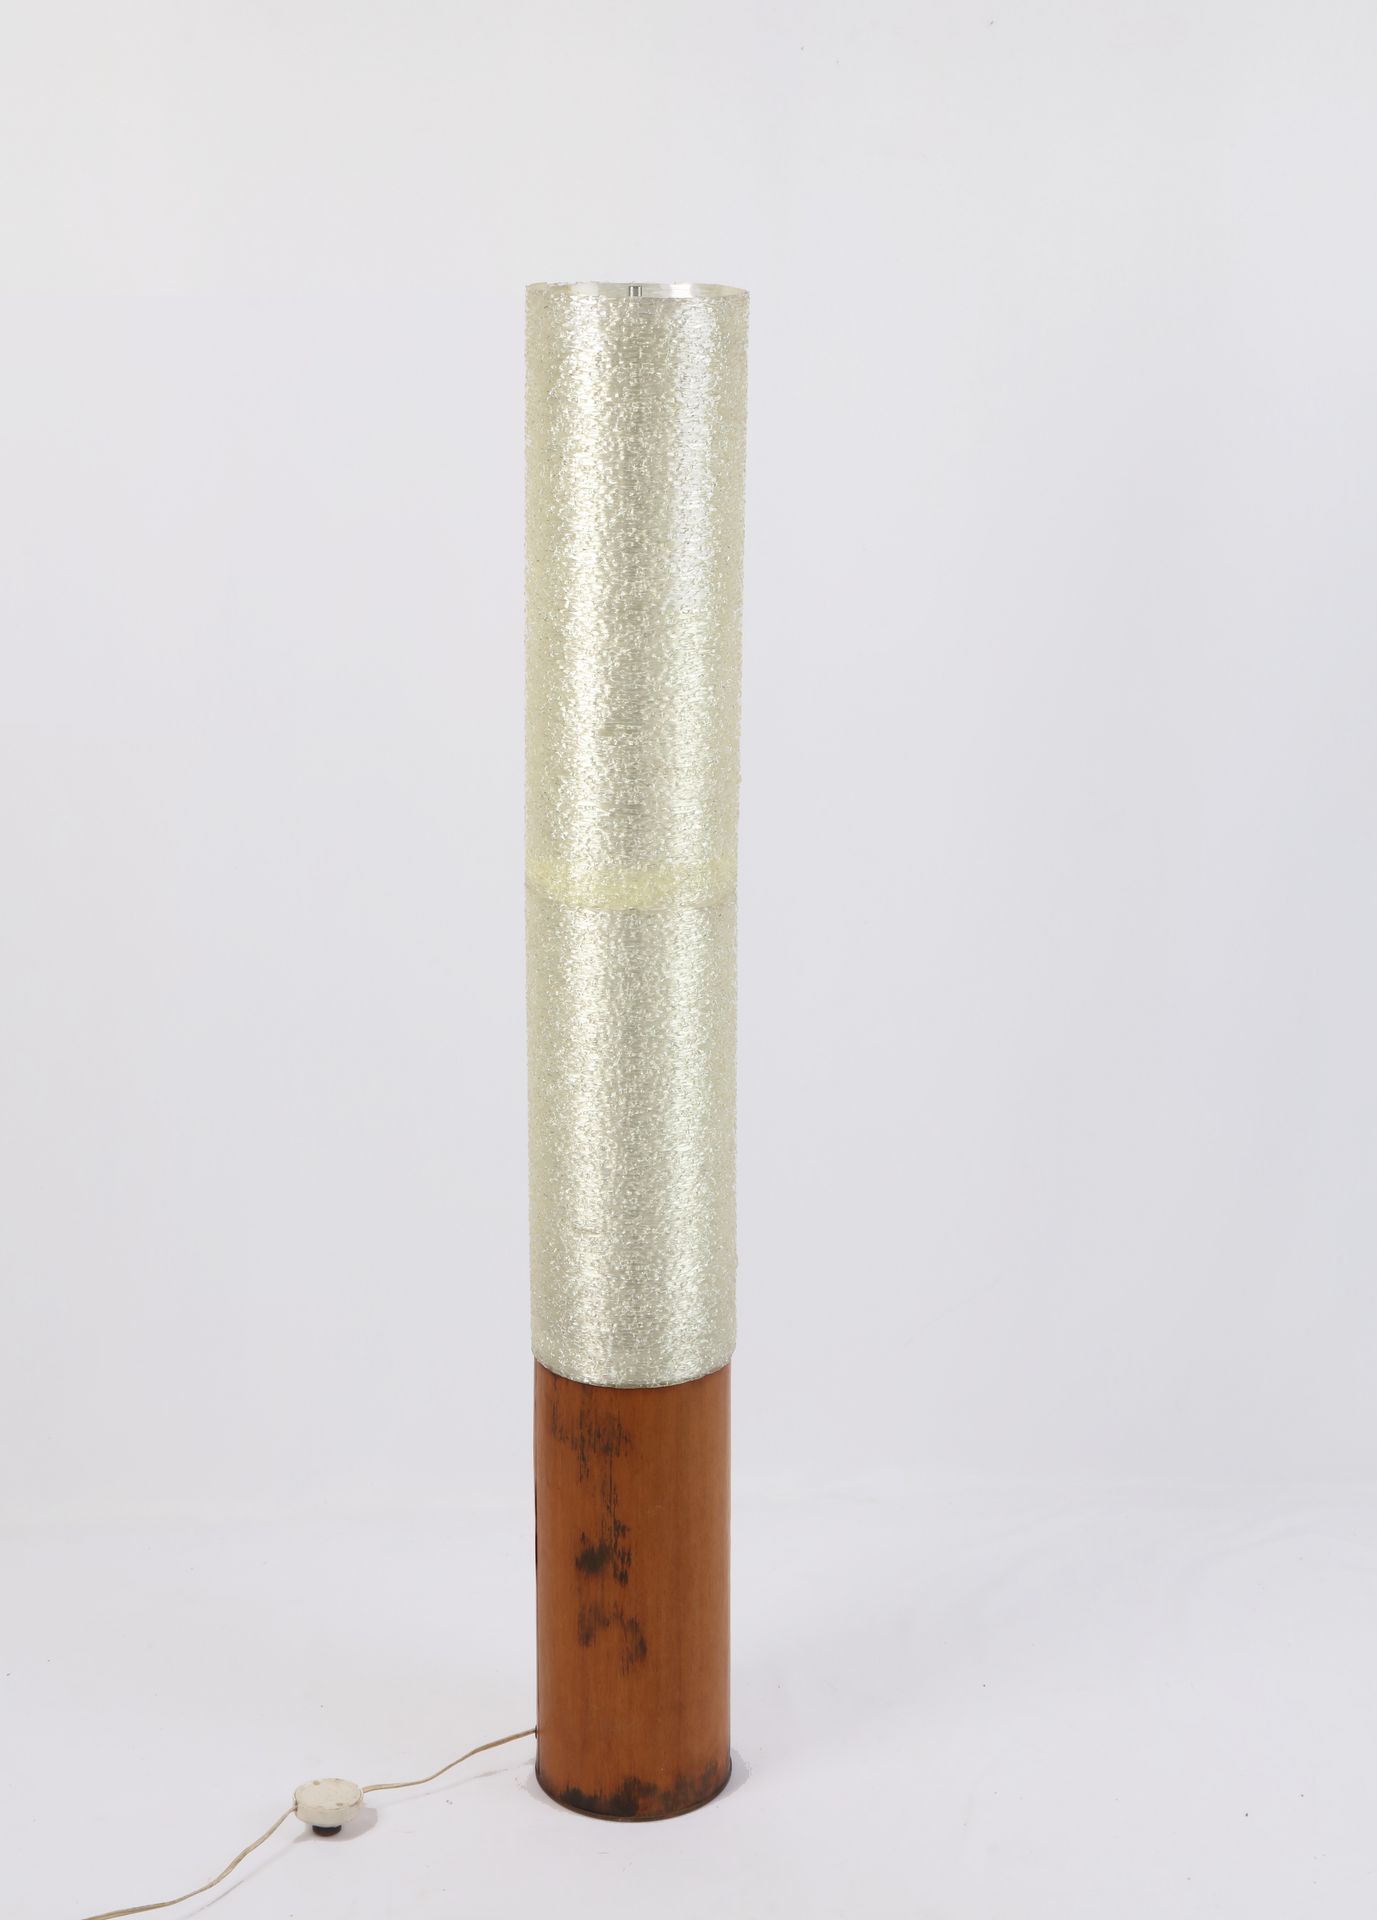 Null Tubular lamp, granite cylinder shape, (reglued), in teak, ht : 131